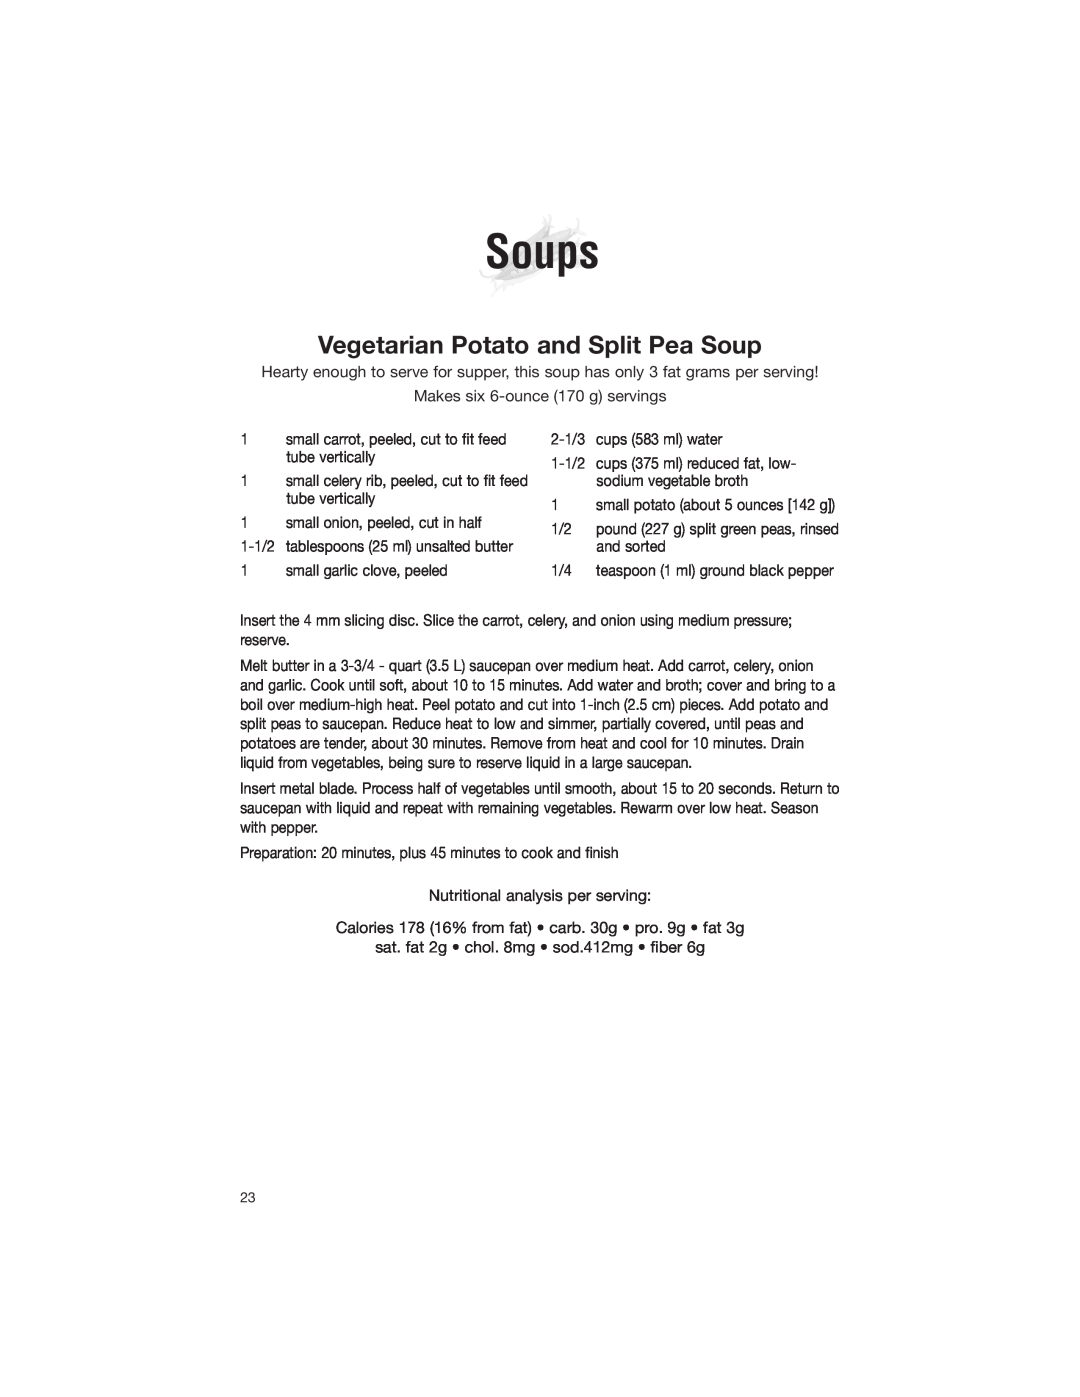 Cuisinart DLC-2007NC manual Soups, Vegetarian Potato and Split Pea Soup 